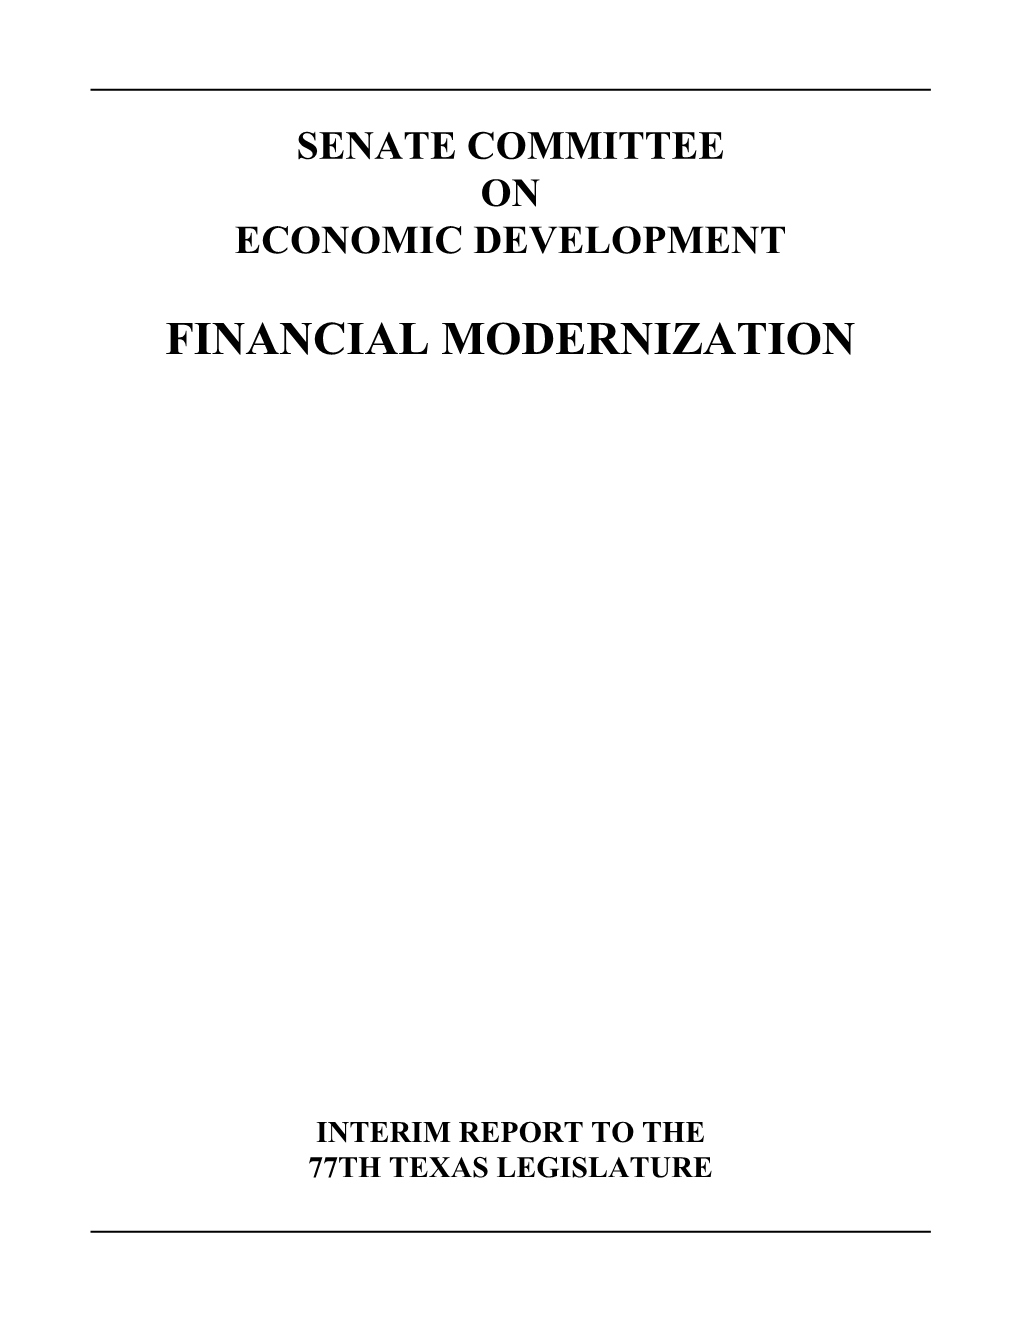 Financial Modernization Report